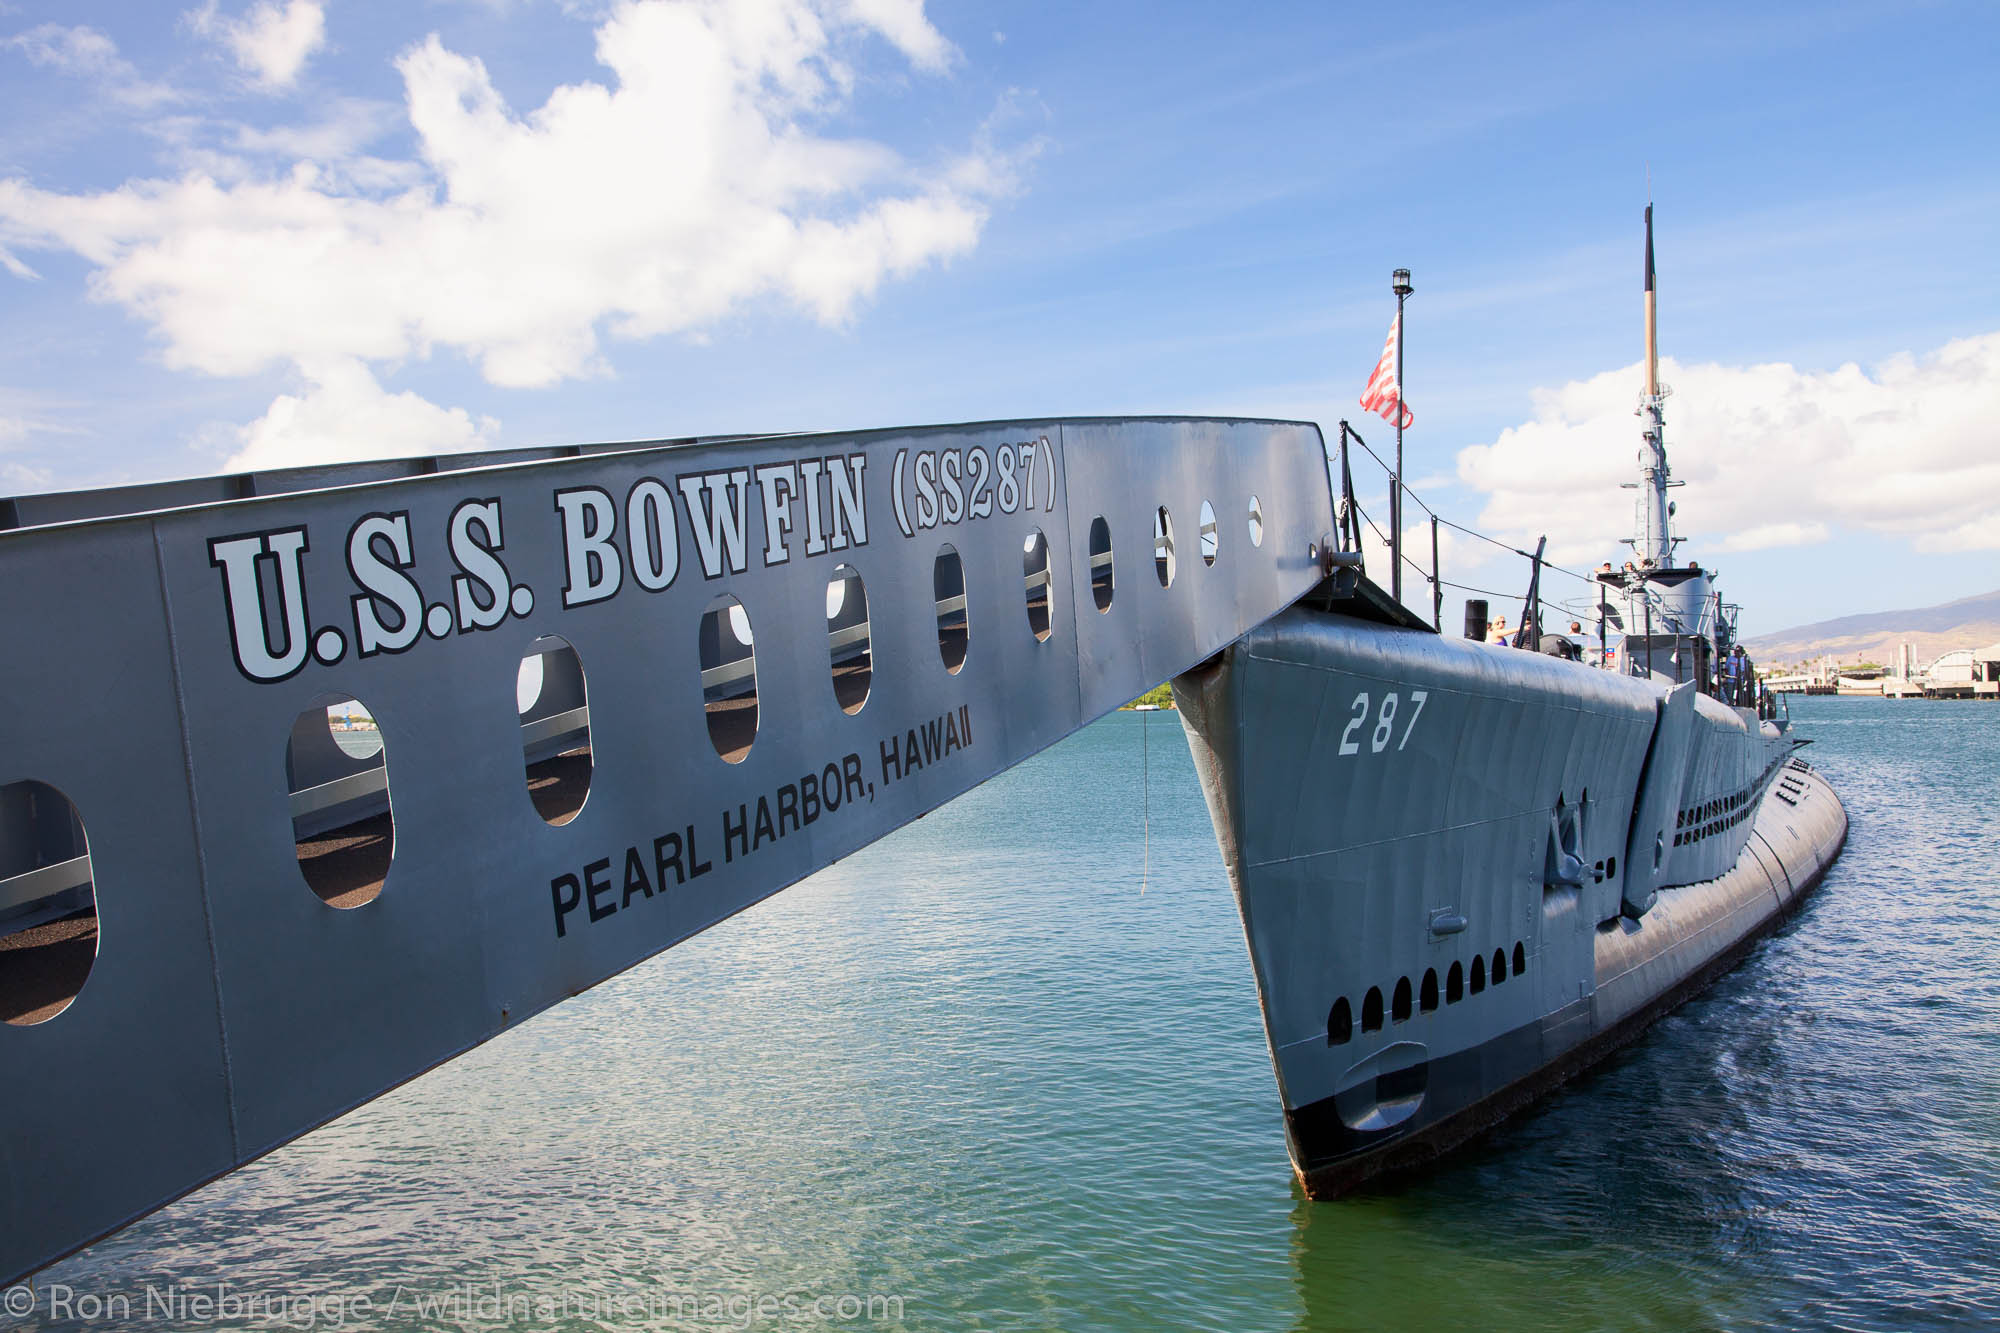 Submarine USS Bowfin at the USS Arizona Memorial, Pearl Harbor, Honolulu, Hawaii.